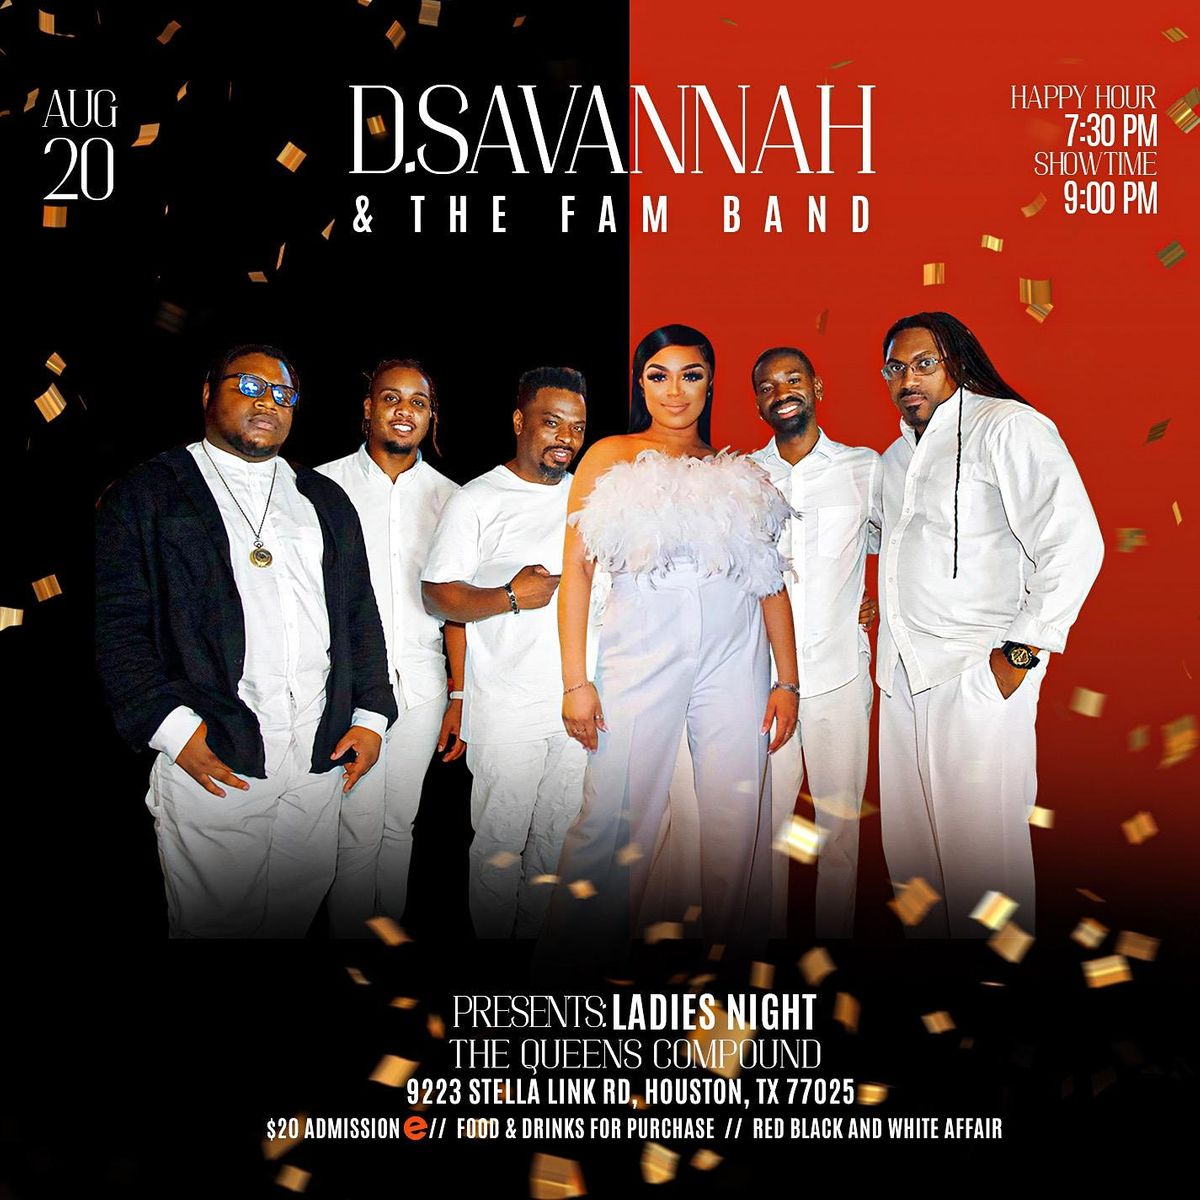 D.Savannah & The Fam  Band Presents "Ladies Night"